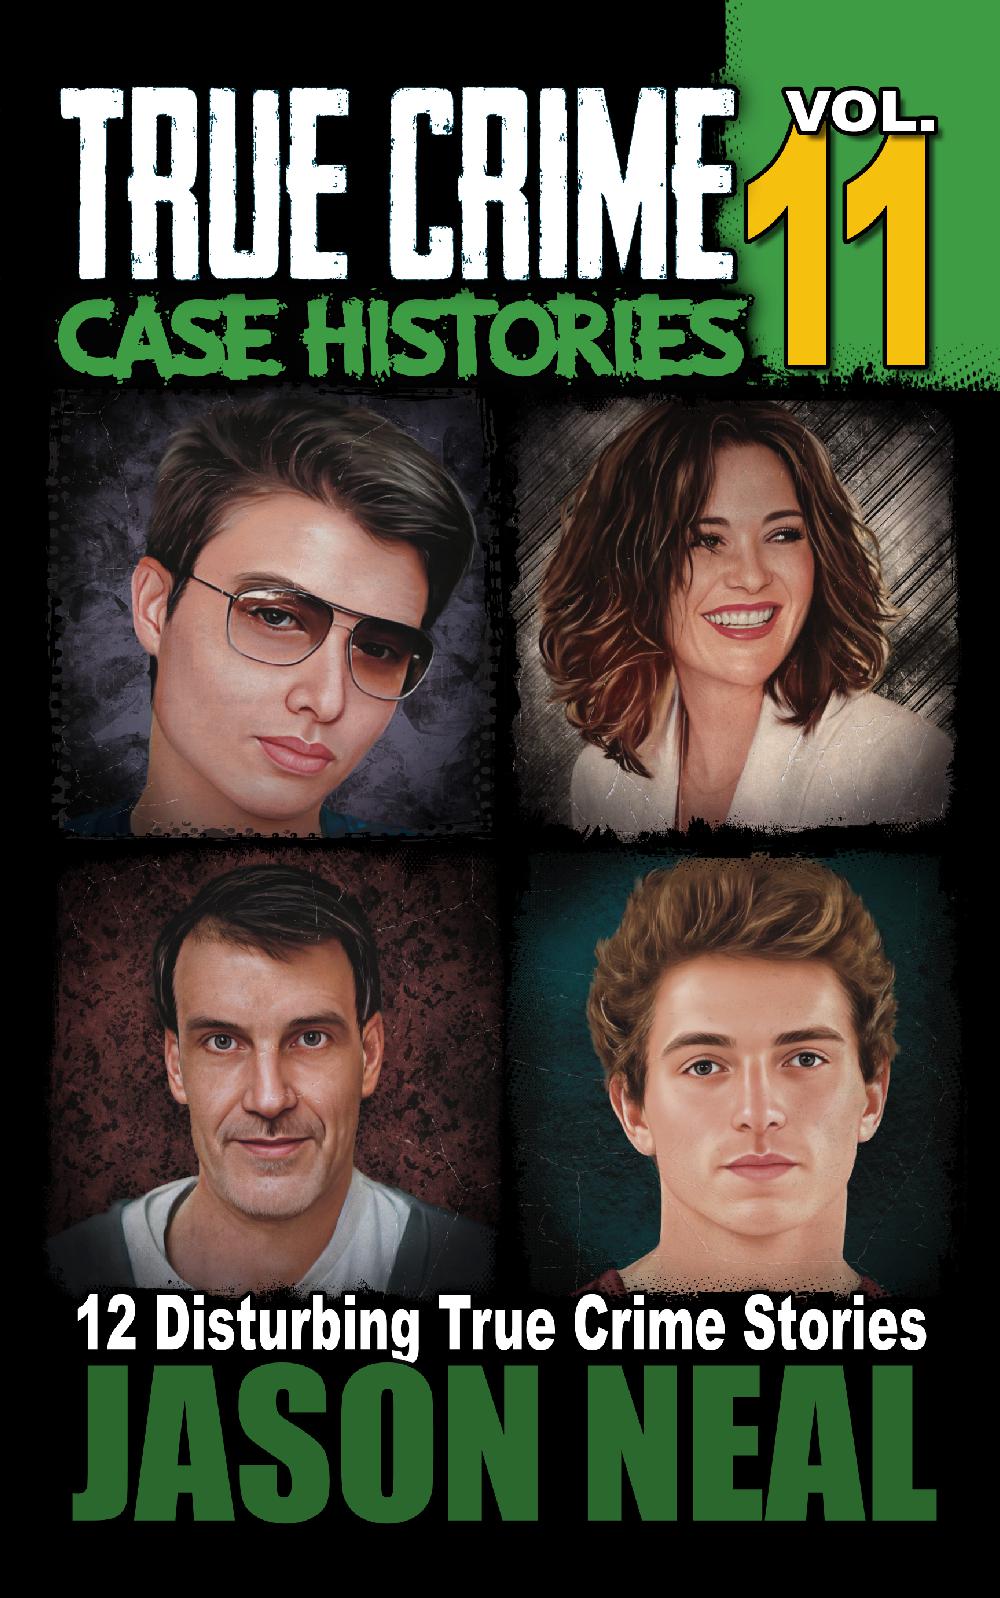 True Crime Case Histories - Volume 11 (PAPERBACK)